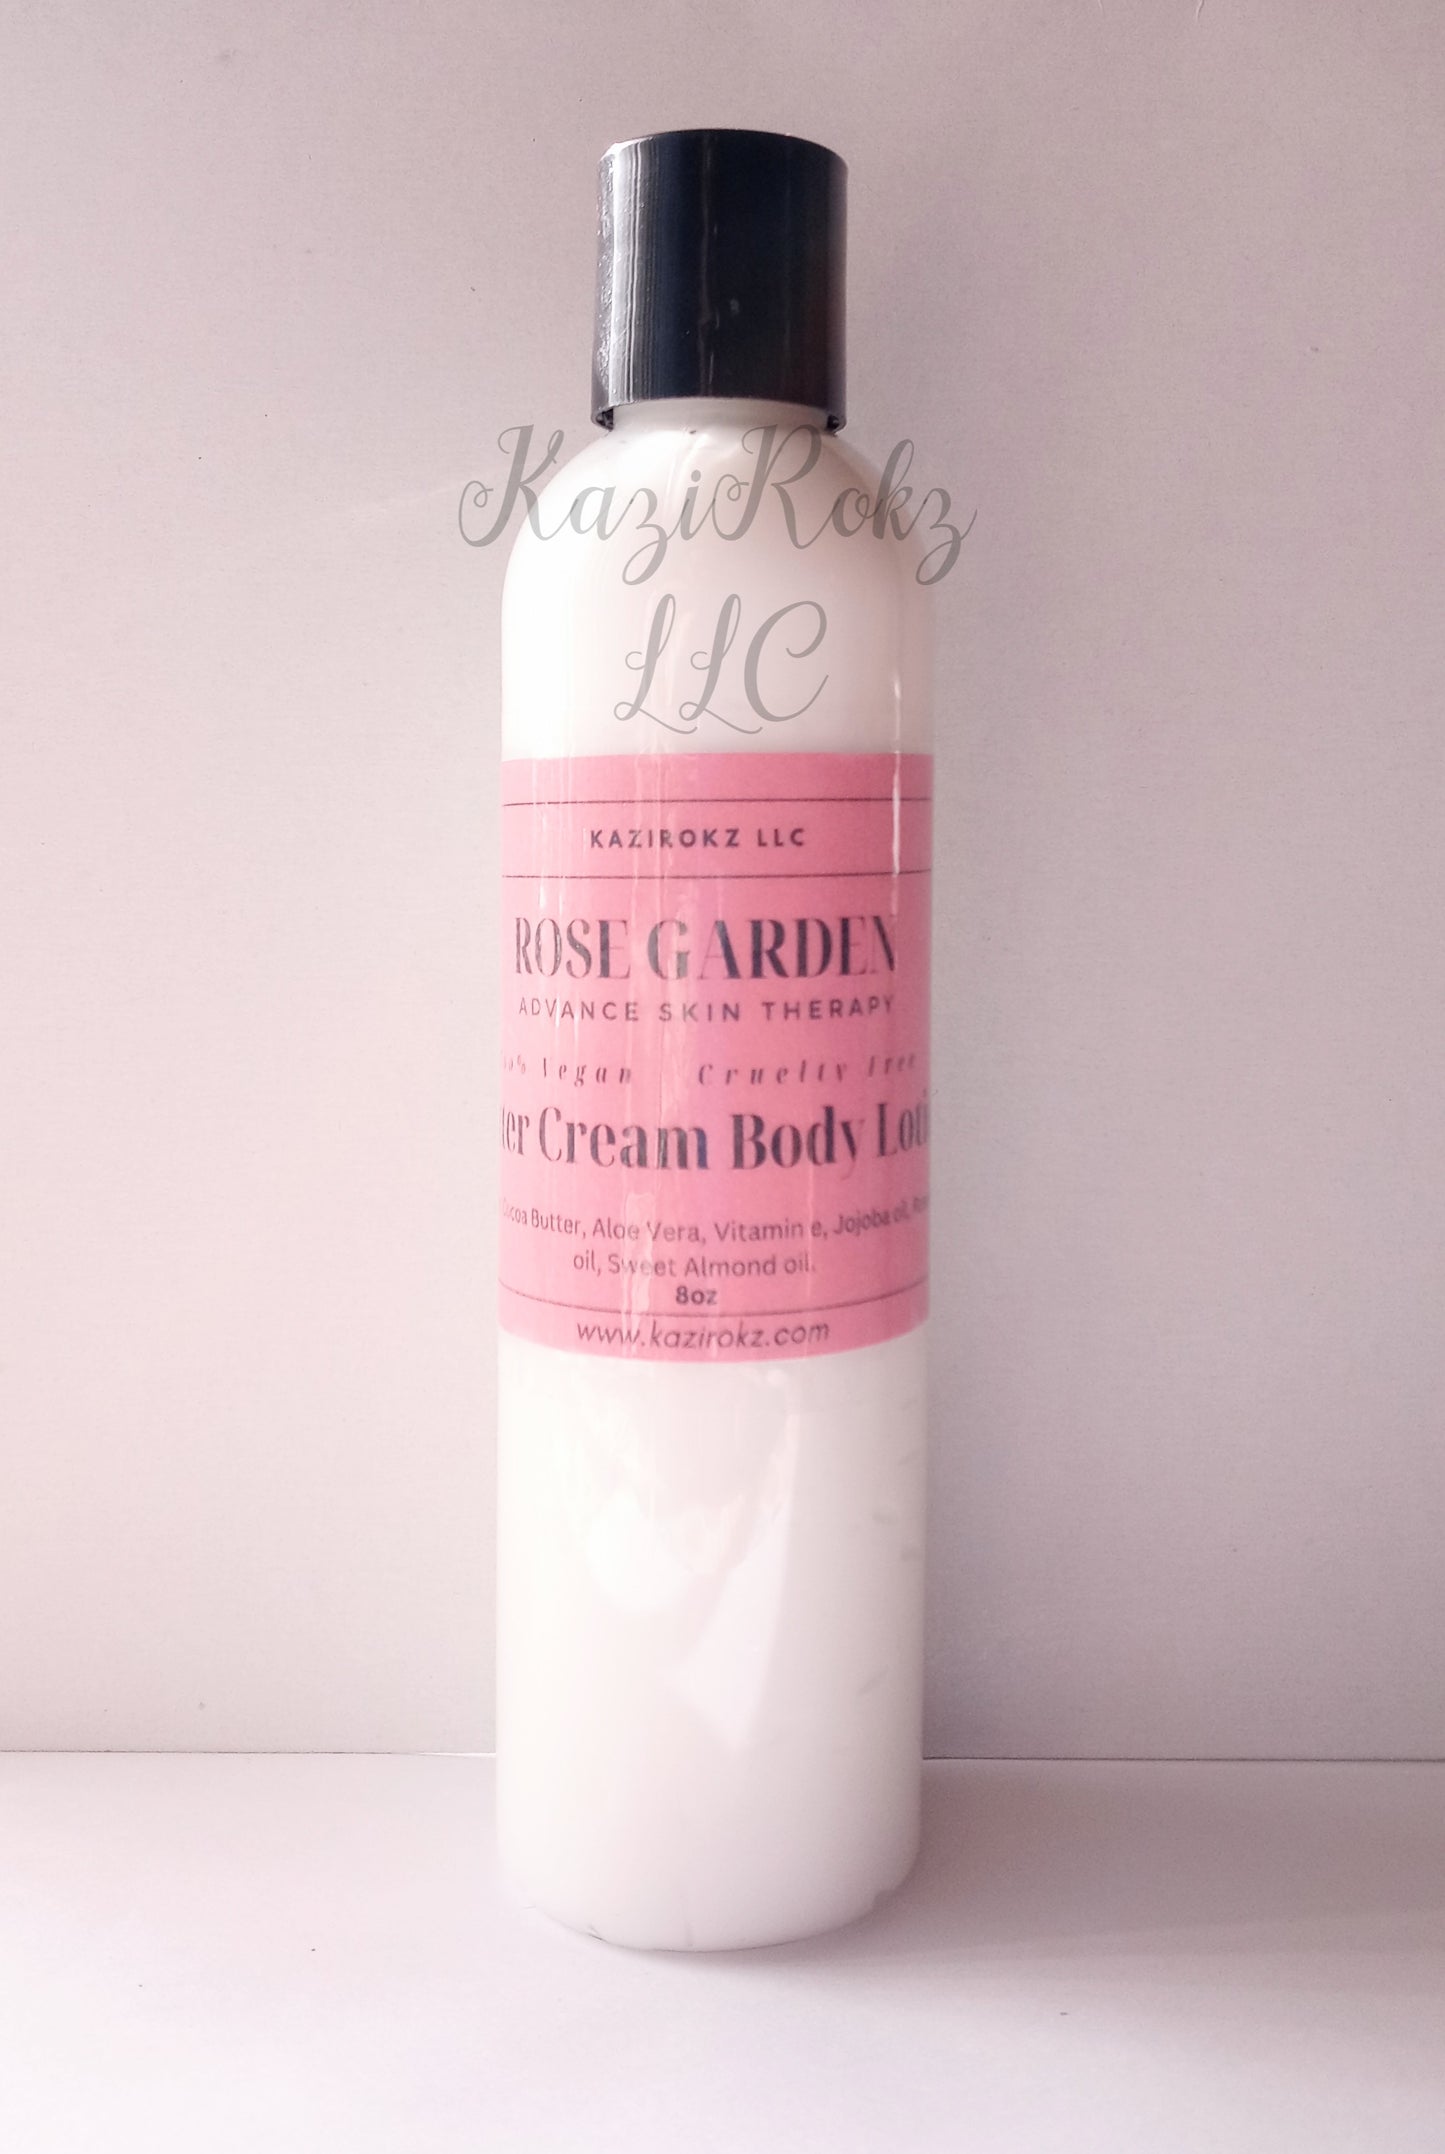 Rose Garden Butter Cream Body Lotion 8oz (100% Vegan / Cruelty Free) Advance Skincare / Eczema Treatment